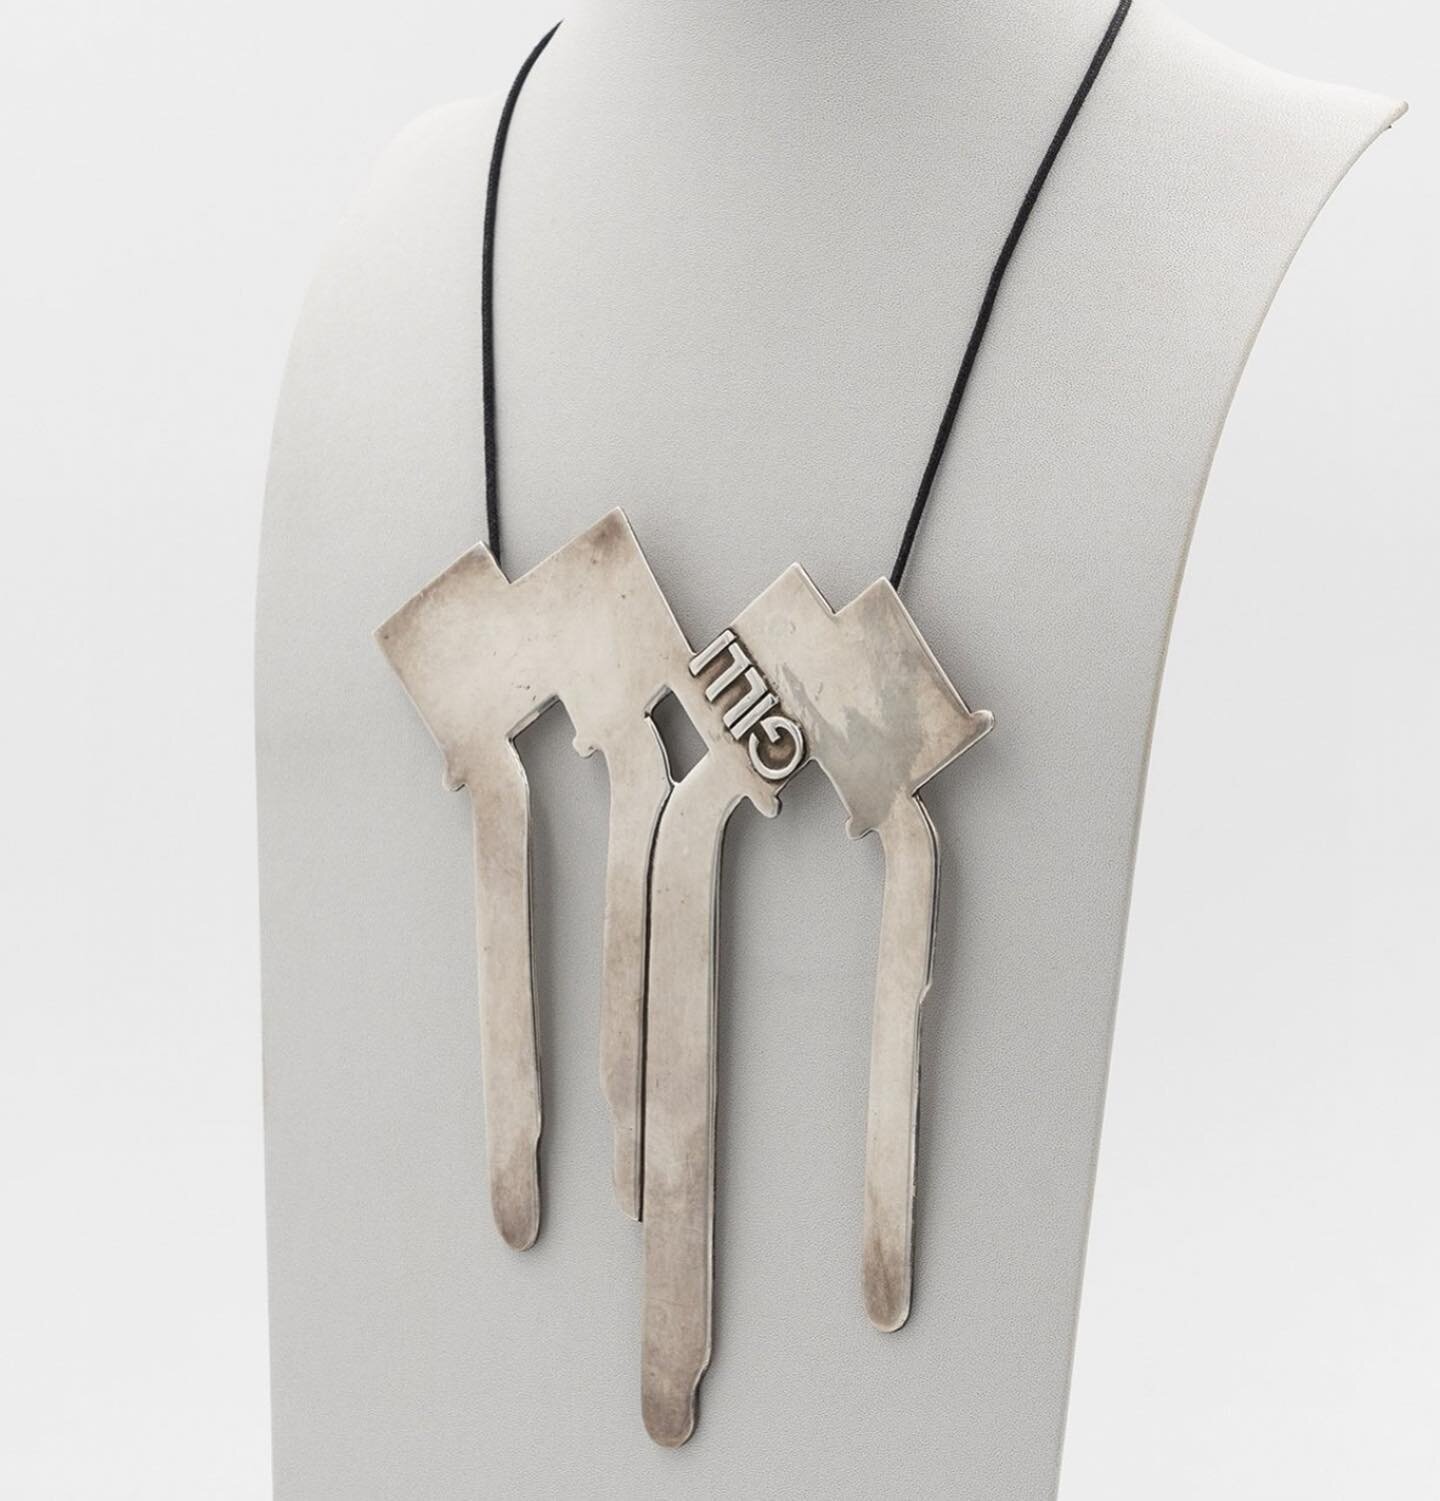 Claude Gilli a silver pendant depicting four pouring pots.
1970&rsquo;
H16cm - L12cm
*
available : info@collectors-gallery.com
*

#artistsjewellery #artistjewellery
#artistsjewelry #artistjewellery
#artistjewels 
#artjewelry #artjewellery
#alternativ